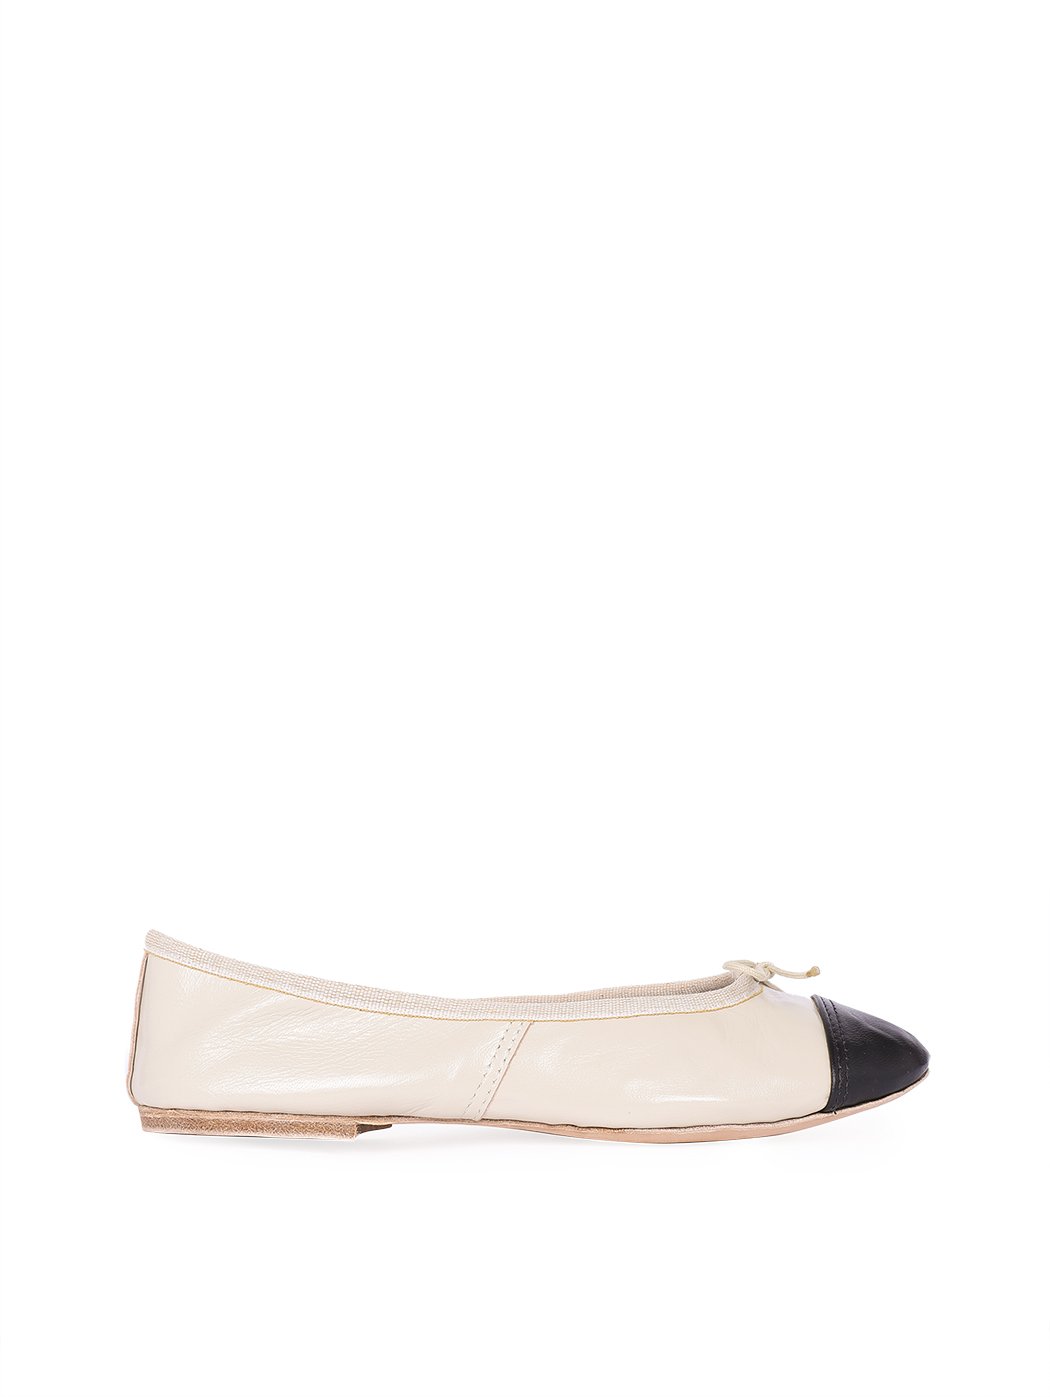 Porselli Handmade Ballet Flat Shoes - Bone with Double Heel